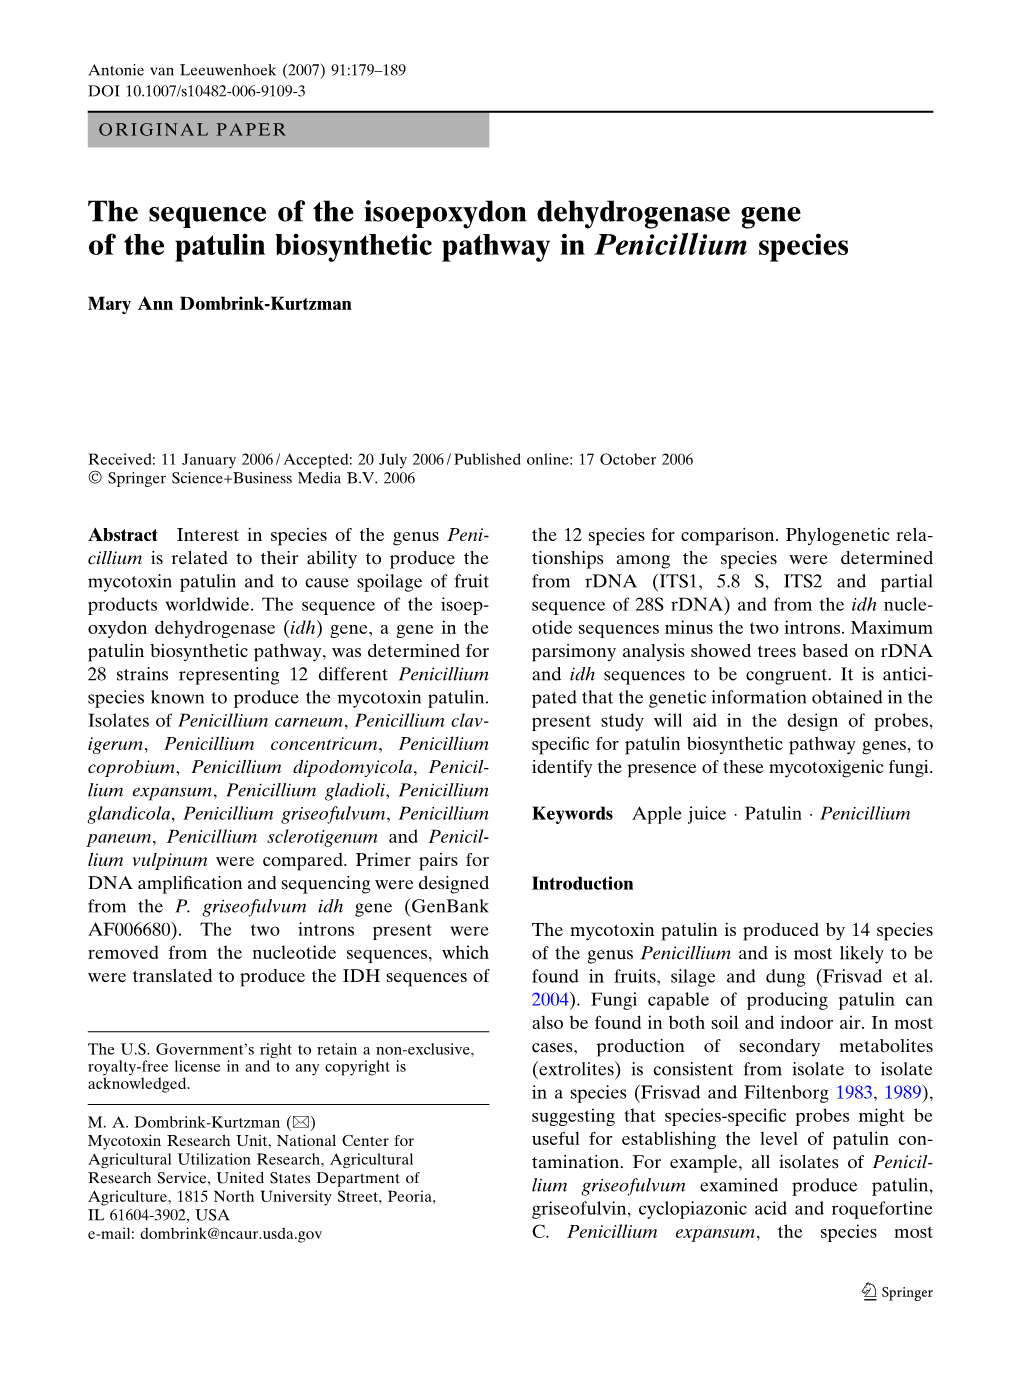 The Sequence of the Isoepoxydon Dehydrogenase Gene of the Patulin Biosynthetic Pathway in Penicillium Species